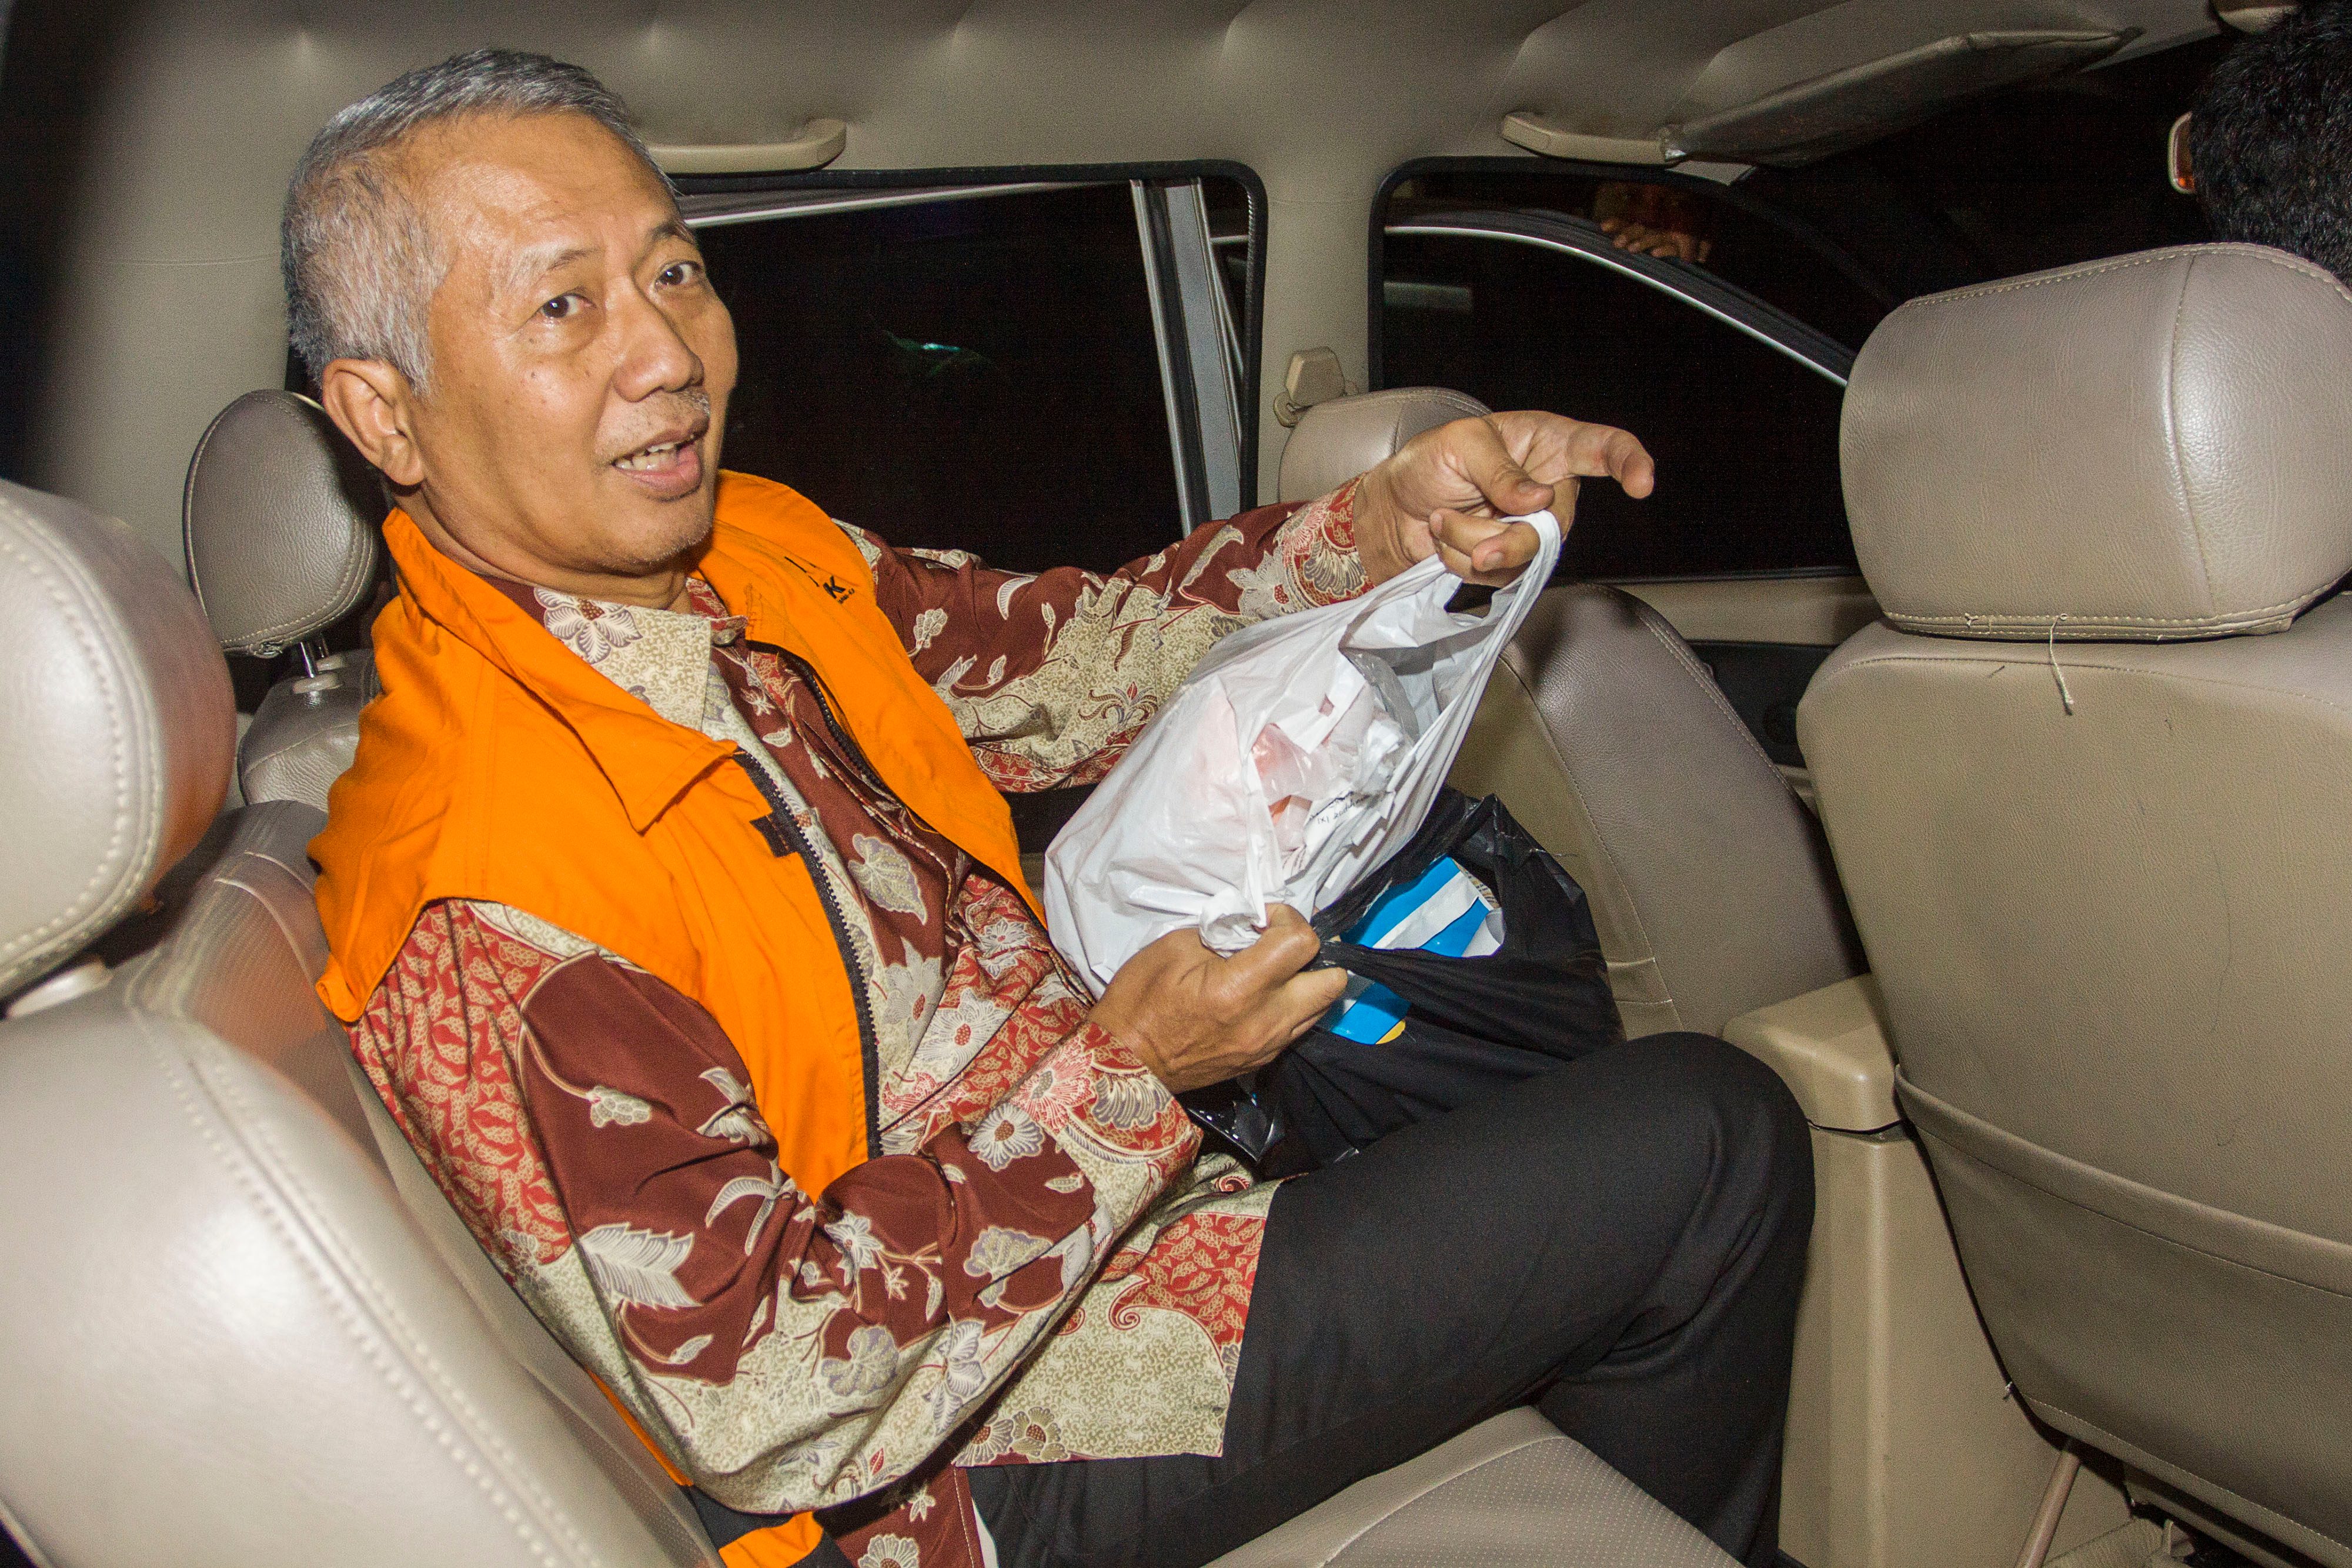 PEMERIKSAAN. Dirjen Perhubungan Laut (Hubla) Kemenhub Antonius Tonny Budiono berada di dalam mobil usai menjalani pemeriksaan, di KPK, Jakarta, Jumat, 25 Agustus. Foto oleh Galih Pradipta/ANTARA 